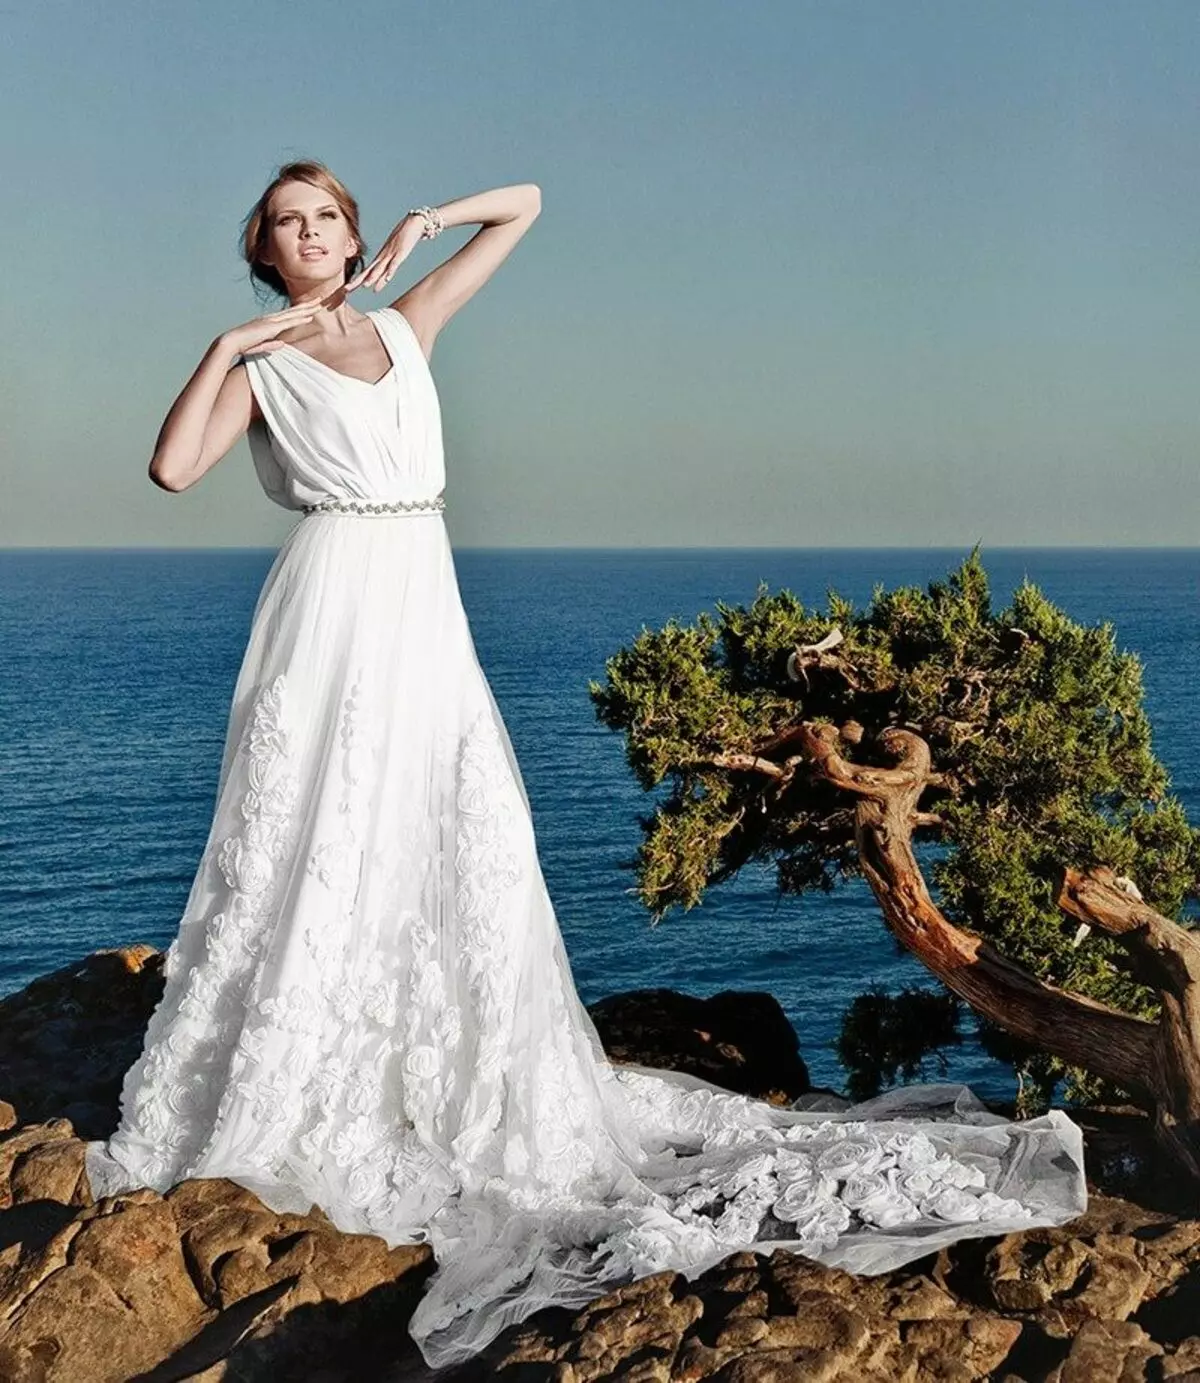 Gaun pengantin dari Anne-Mariee dari koleksi 2014 dalam gaya Yunani